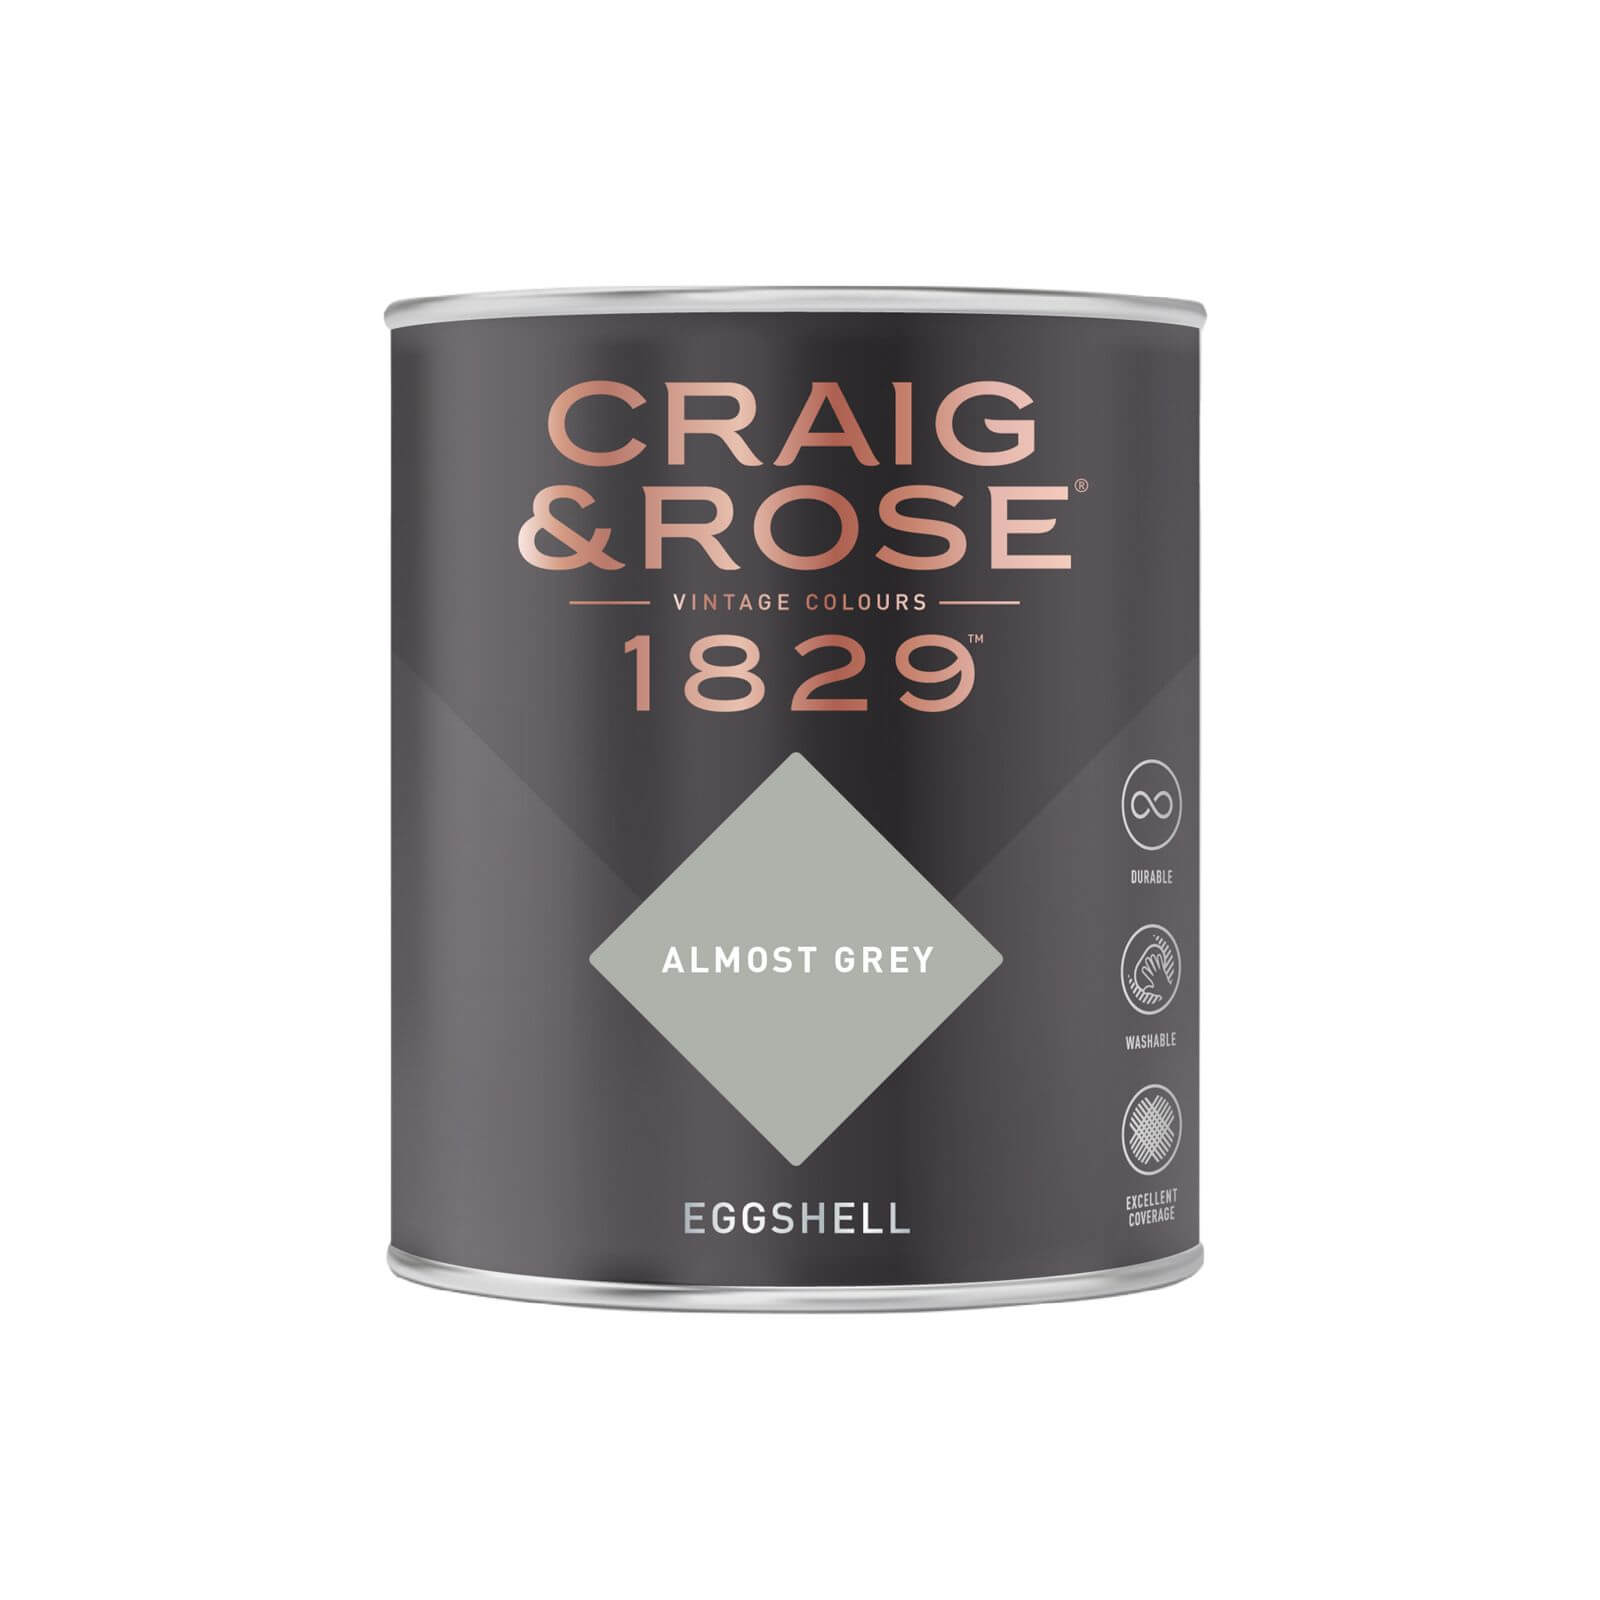 Craig & Rose 1829 Eggshell Paint Almost Grey - 750ml